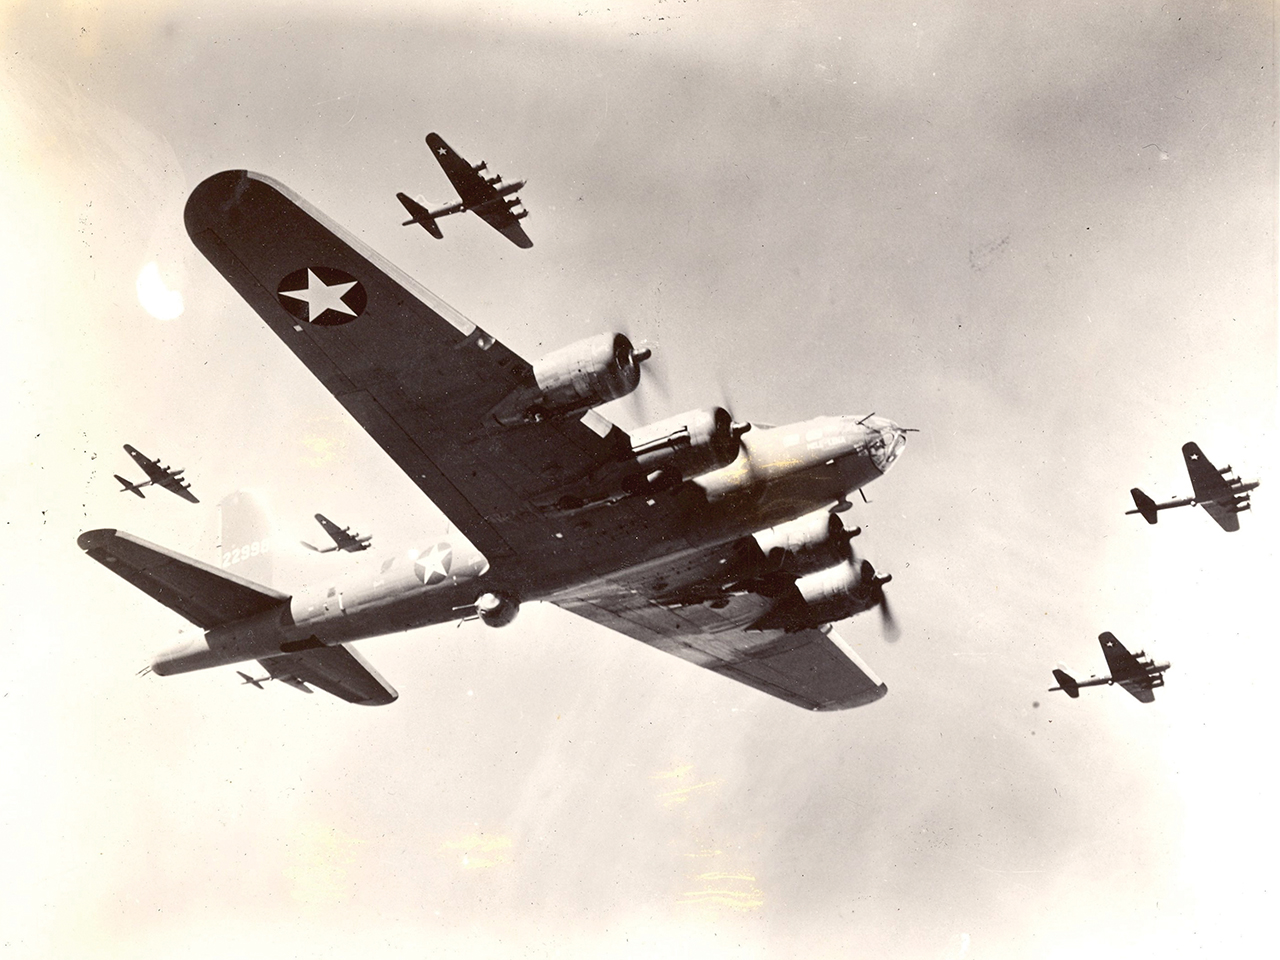 Bomber planes flying